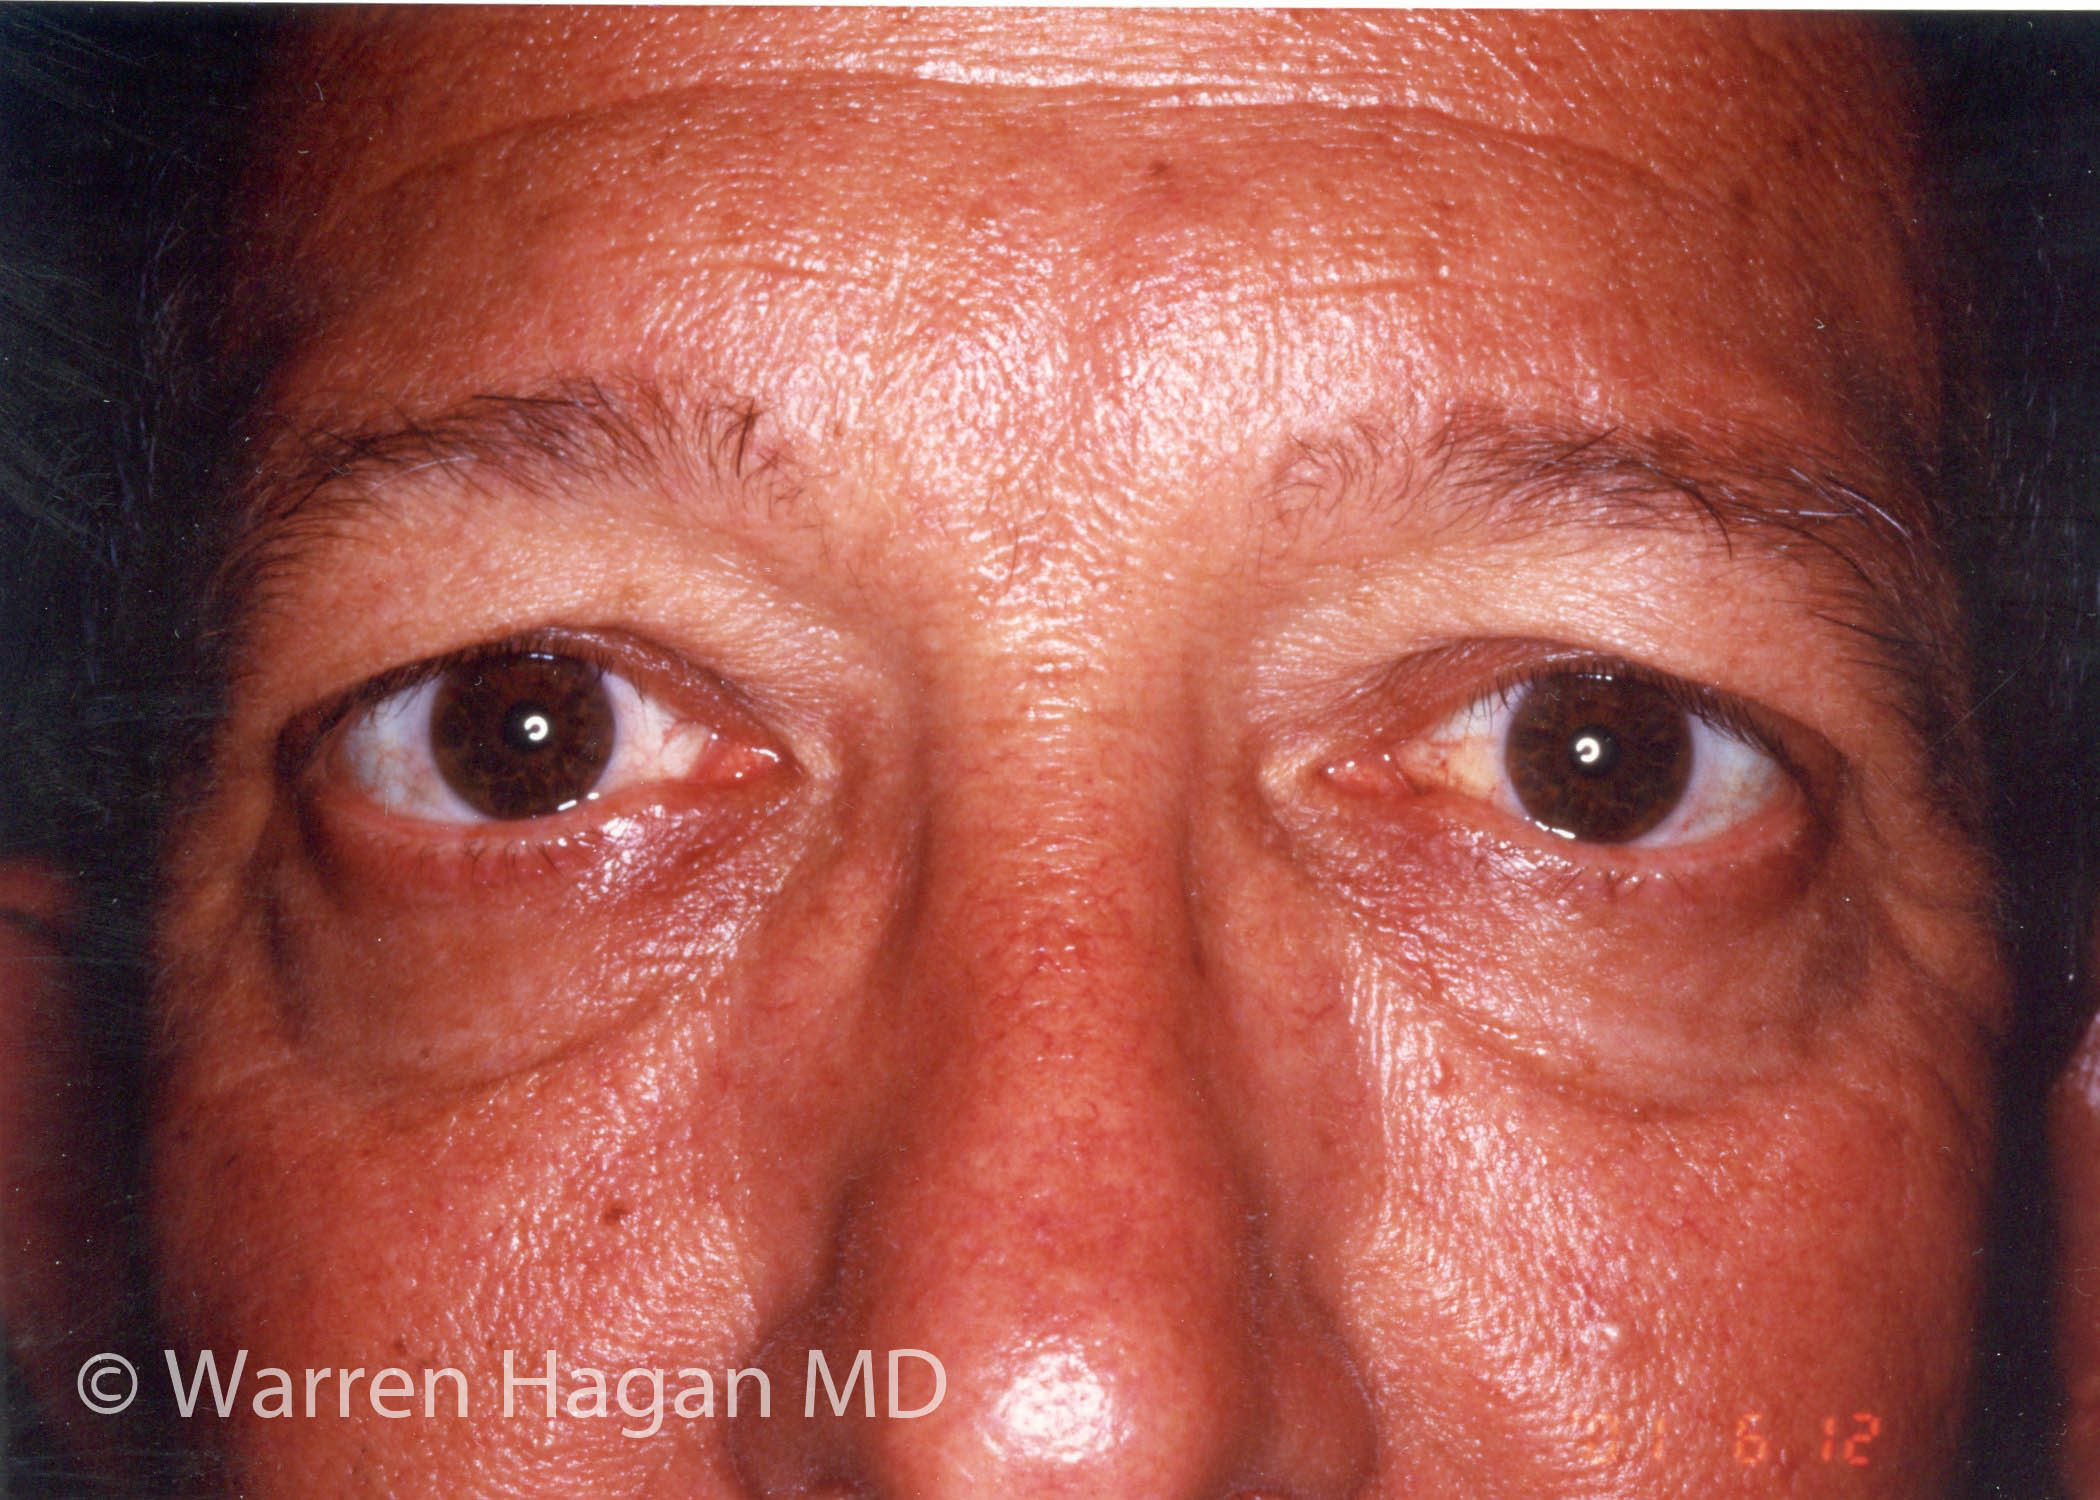 Blepharoplasty - Eyelids - before photo - straight view